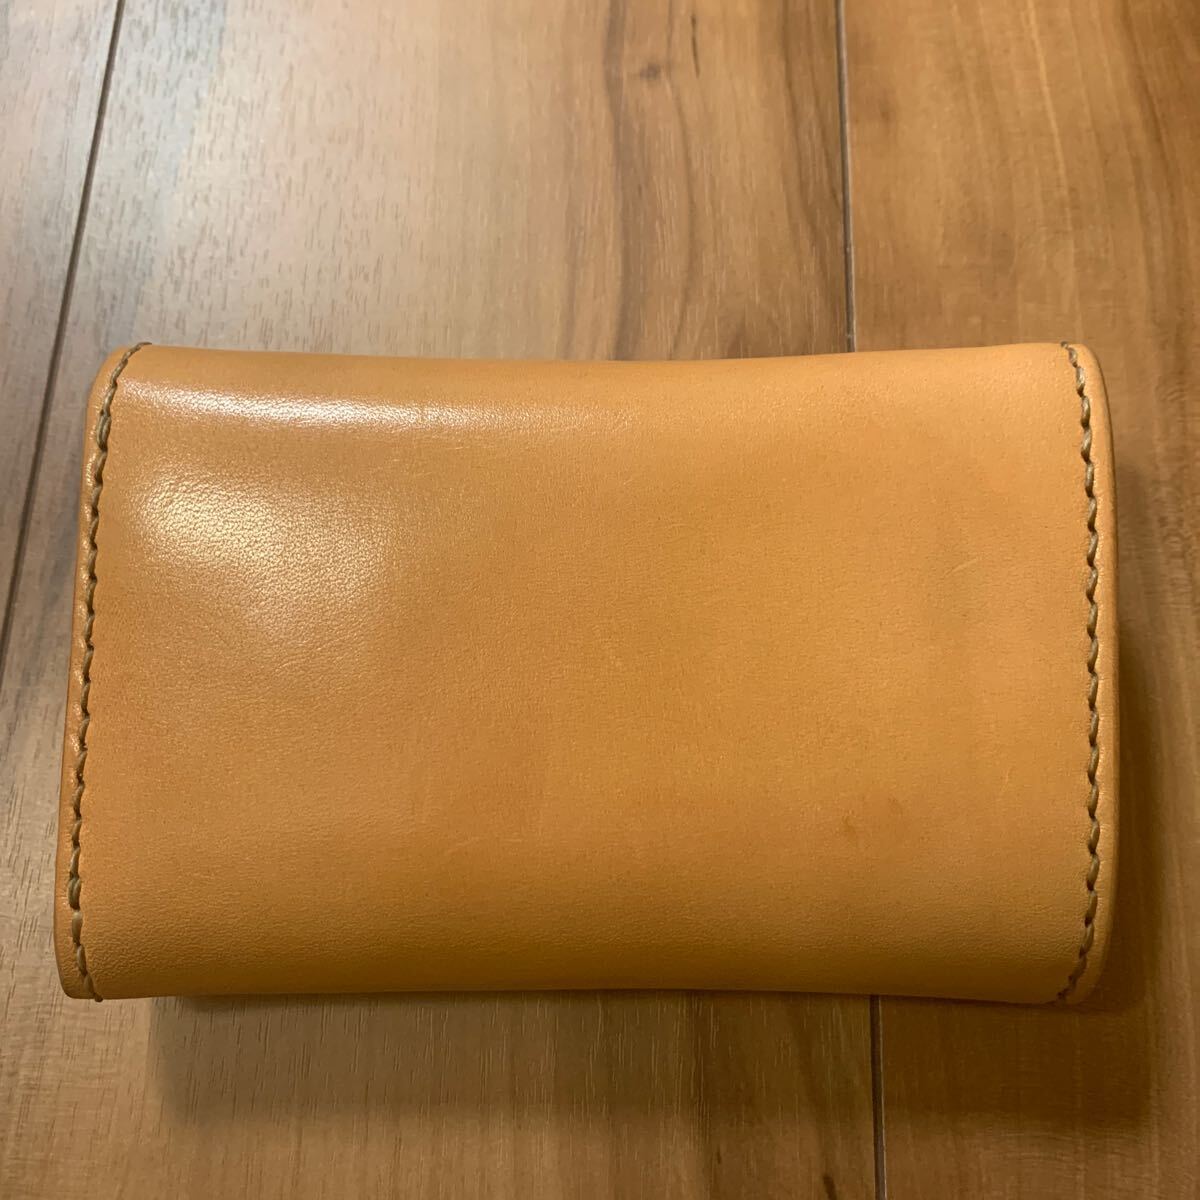 THE FLAT HEAD Flat Head purse leather original leather wallet TFW-01 many fat leather leather purse 